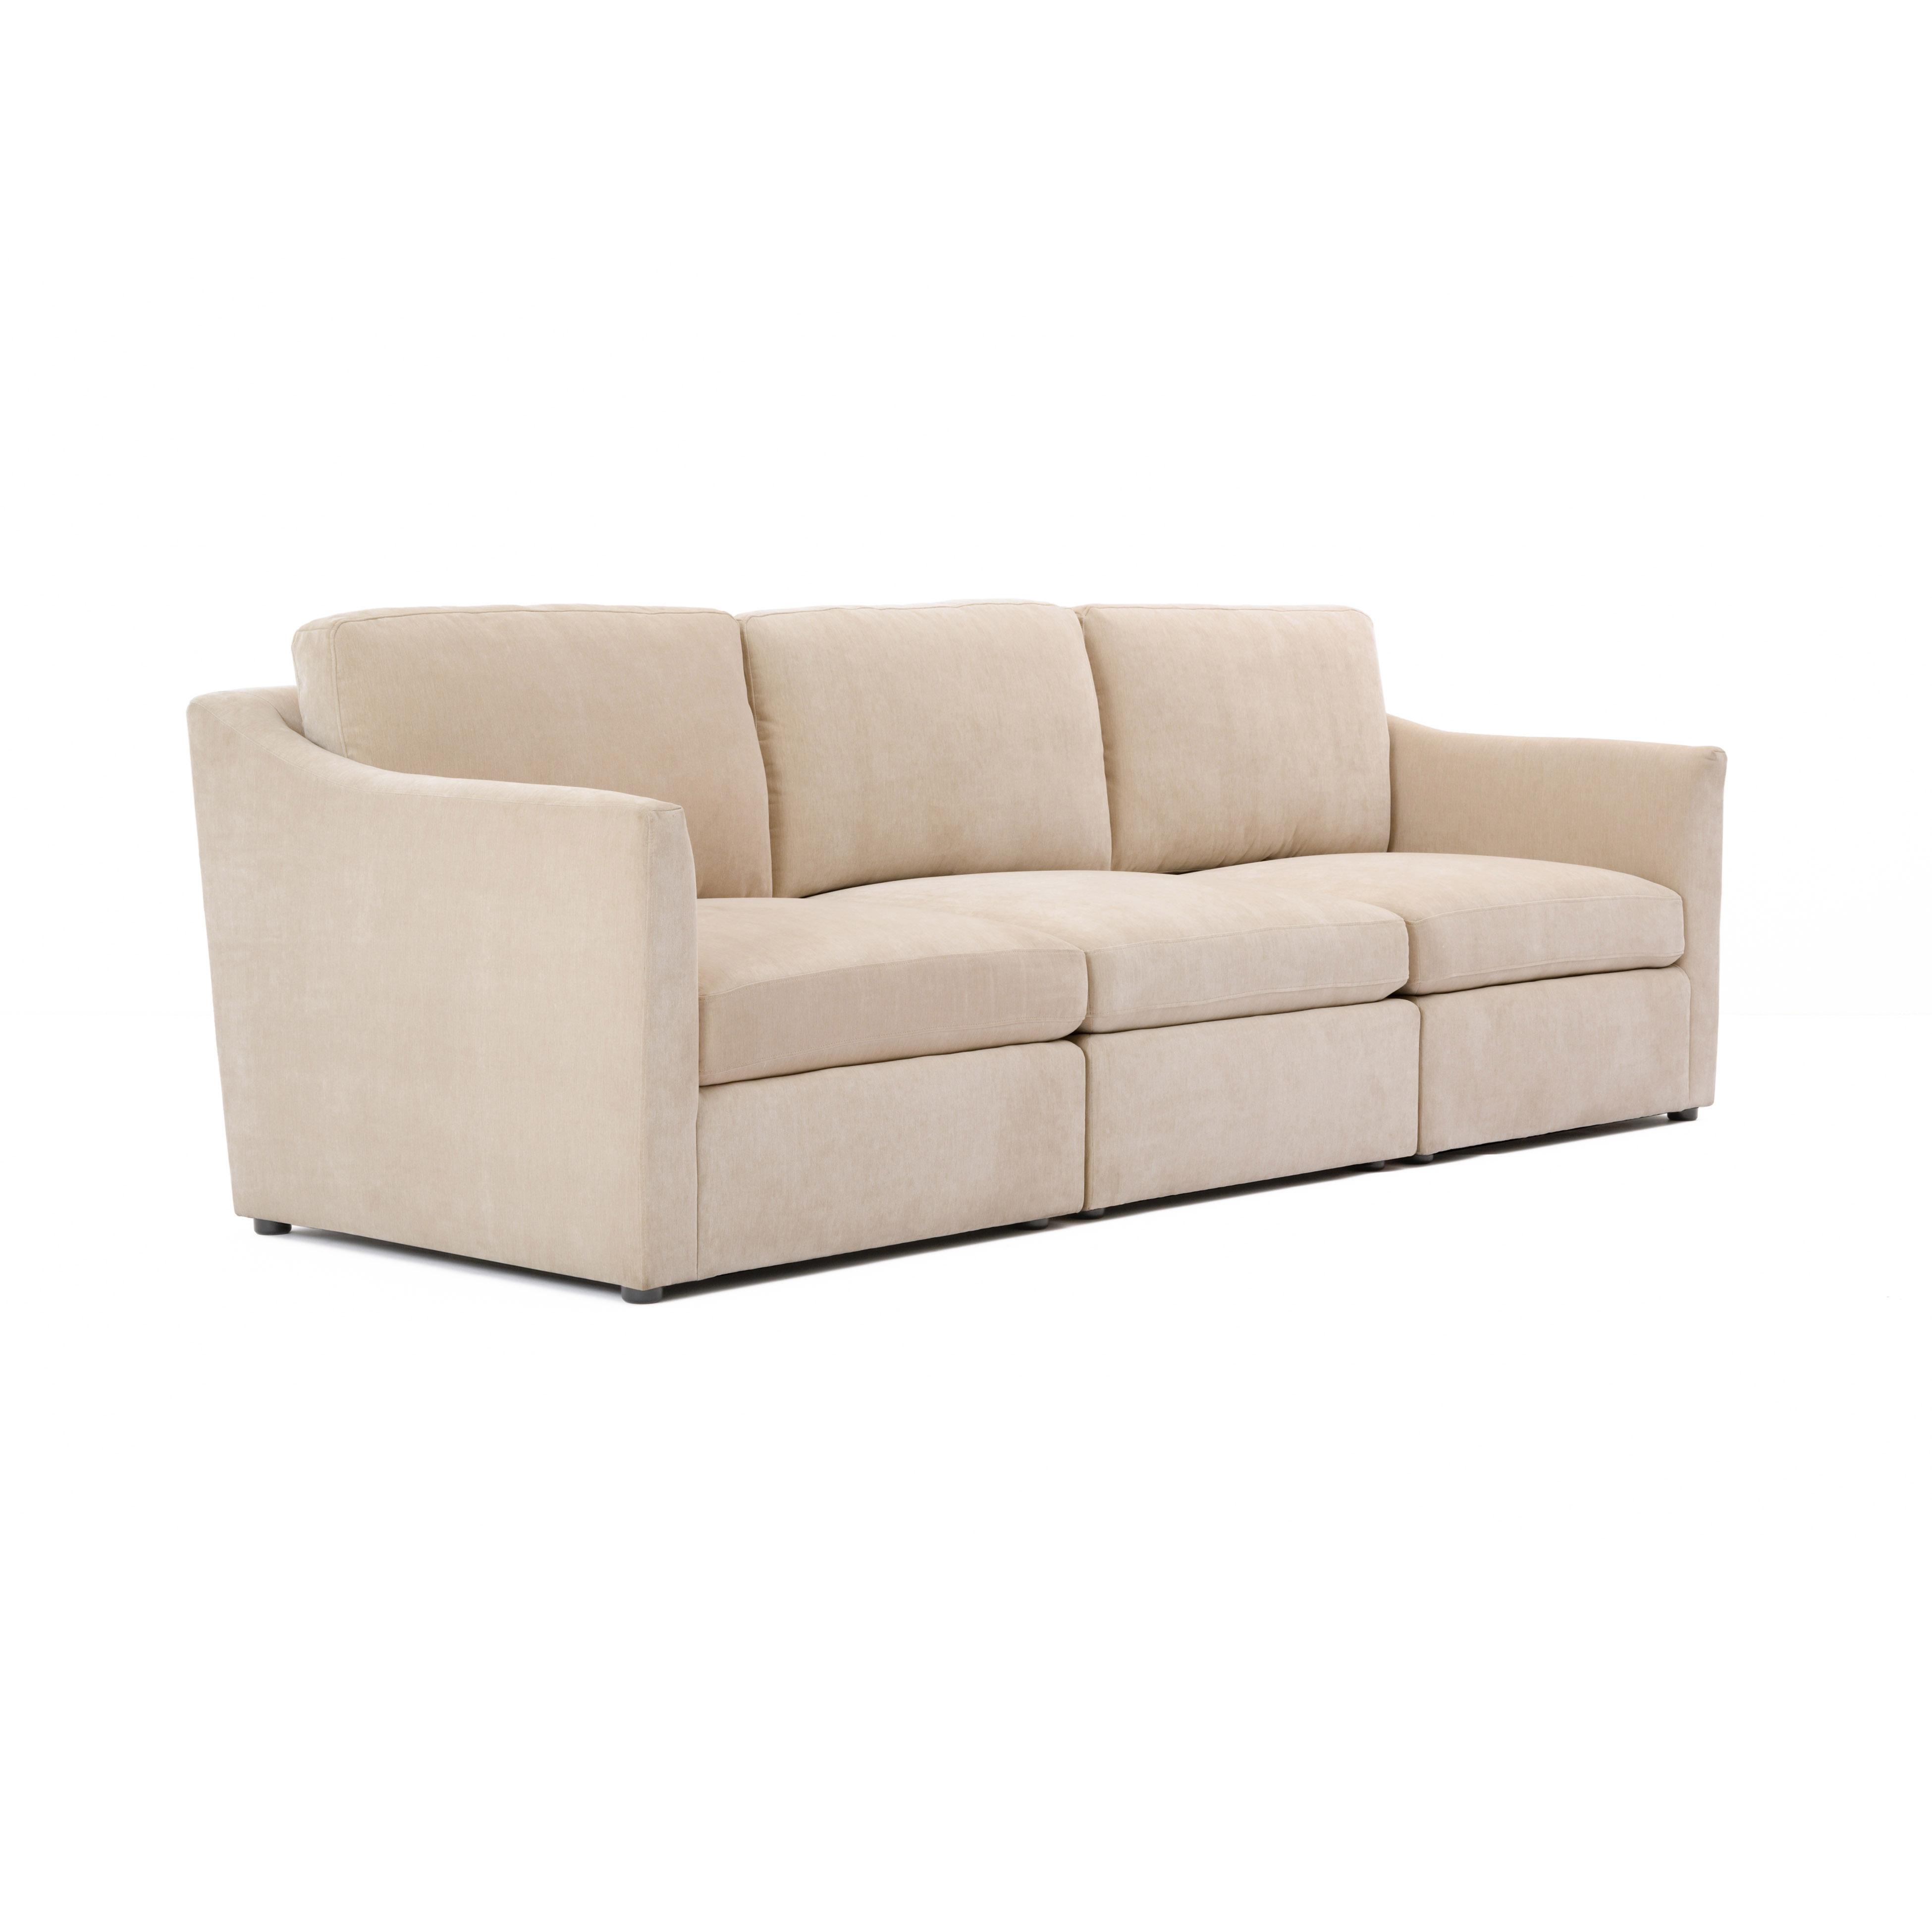 Aiden Beige Modular Sofa - Image 1